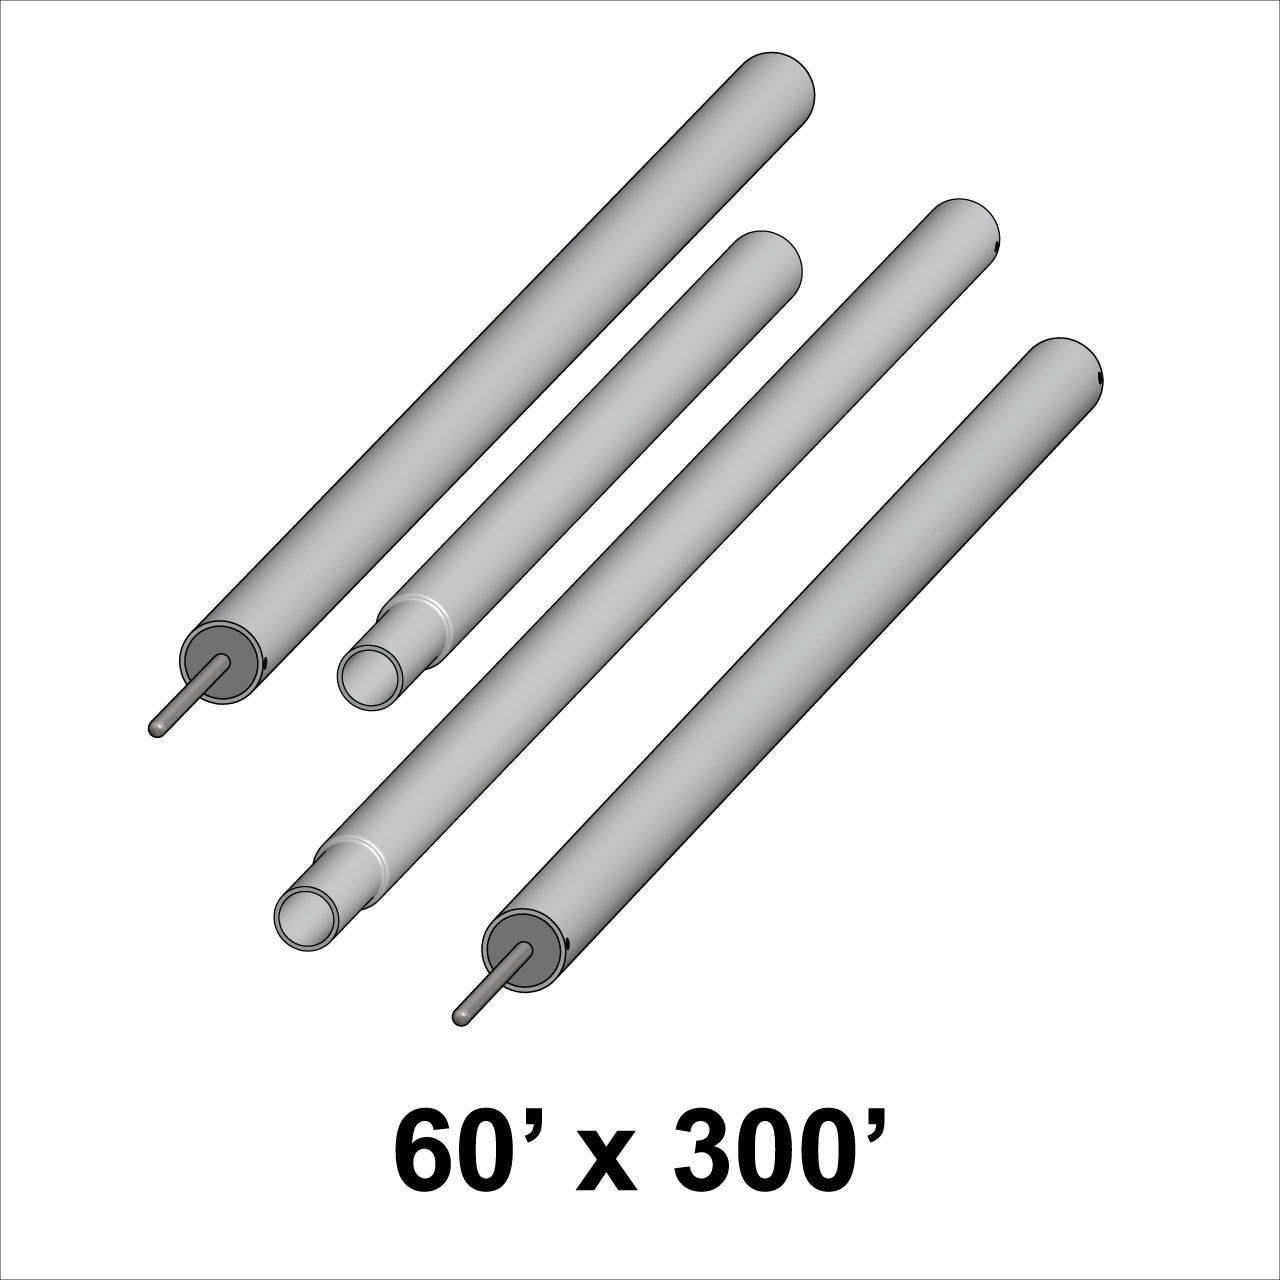 60' x 300' Classic Series Pole Kit